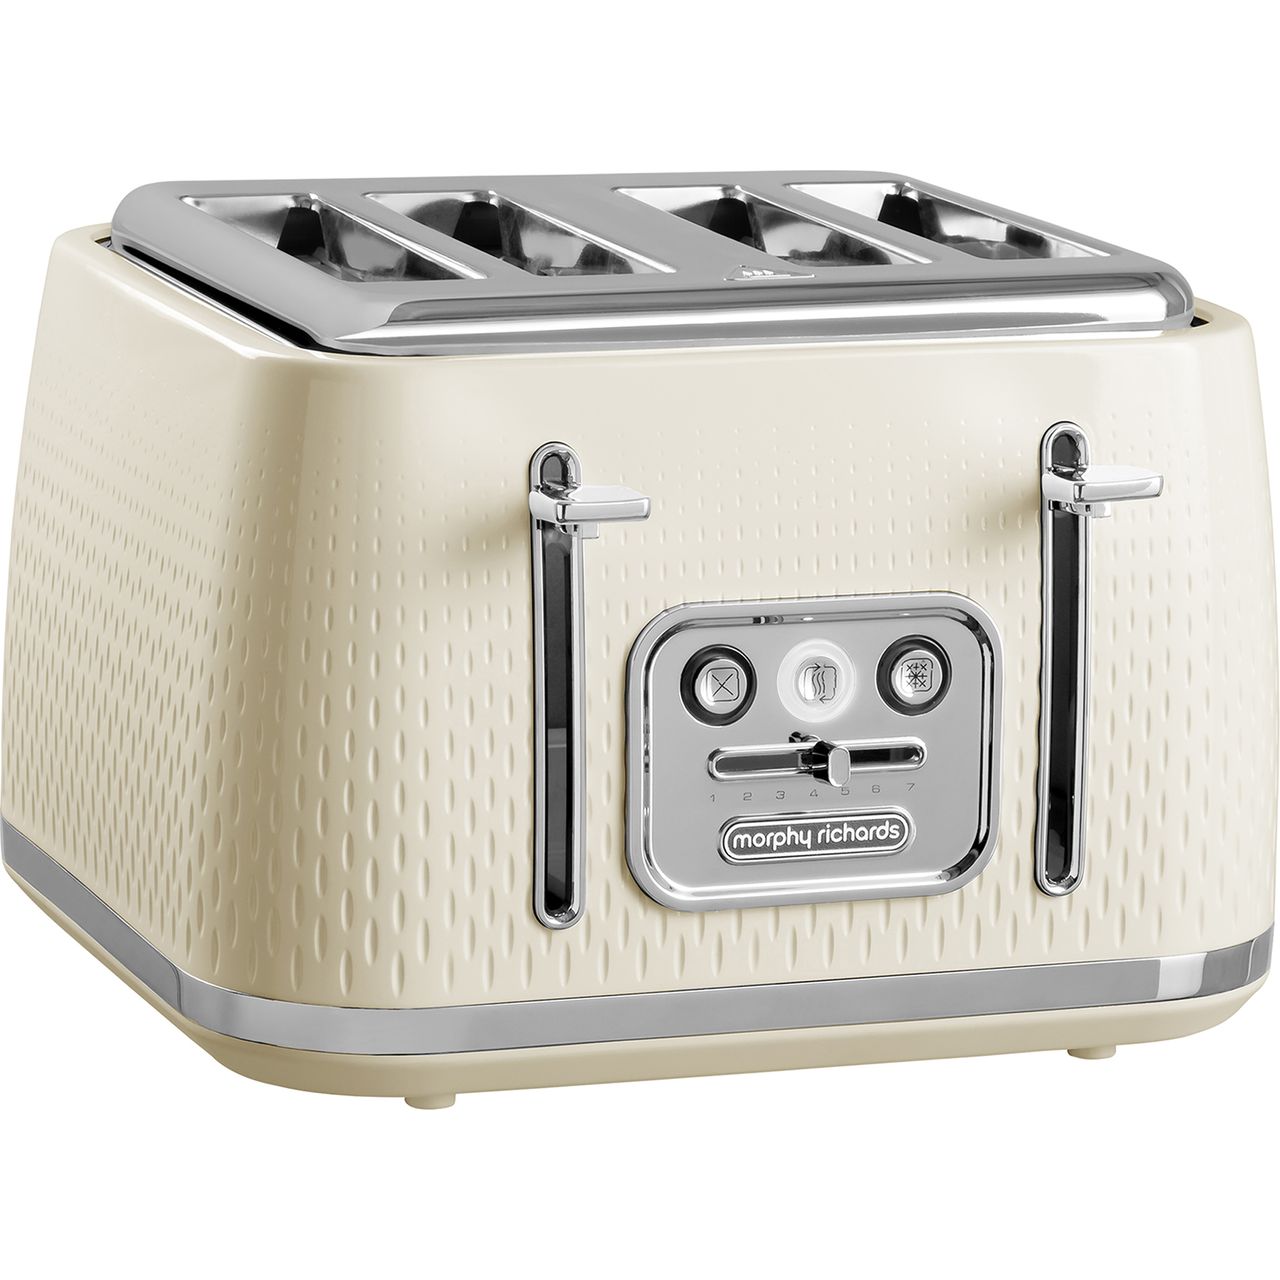 Morphy Richards Verve 243011 4 Slice Toaster Review